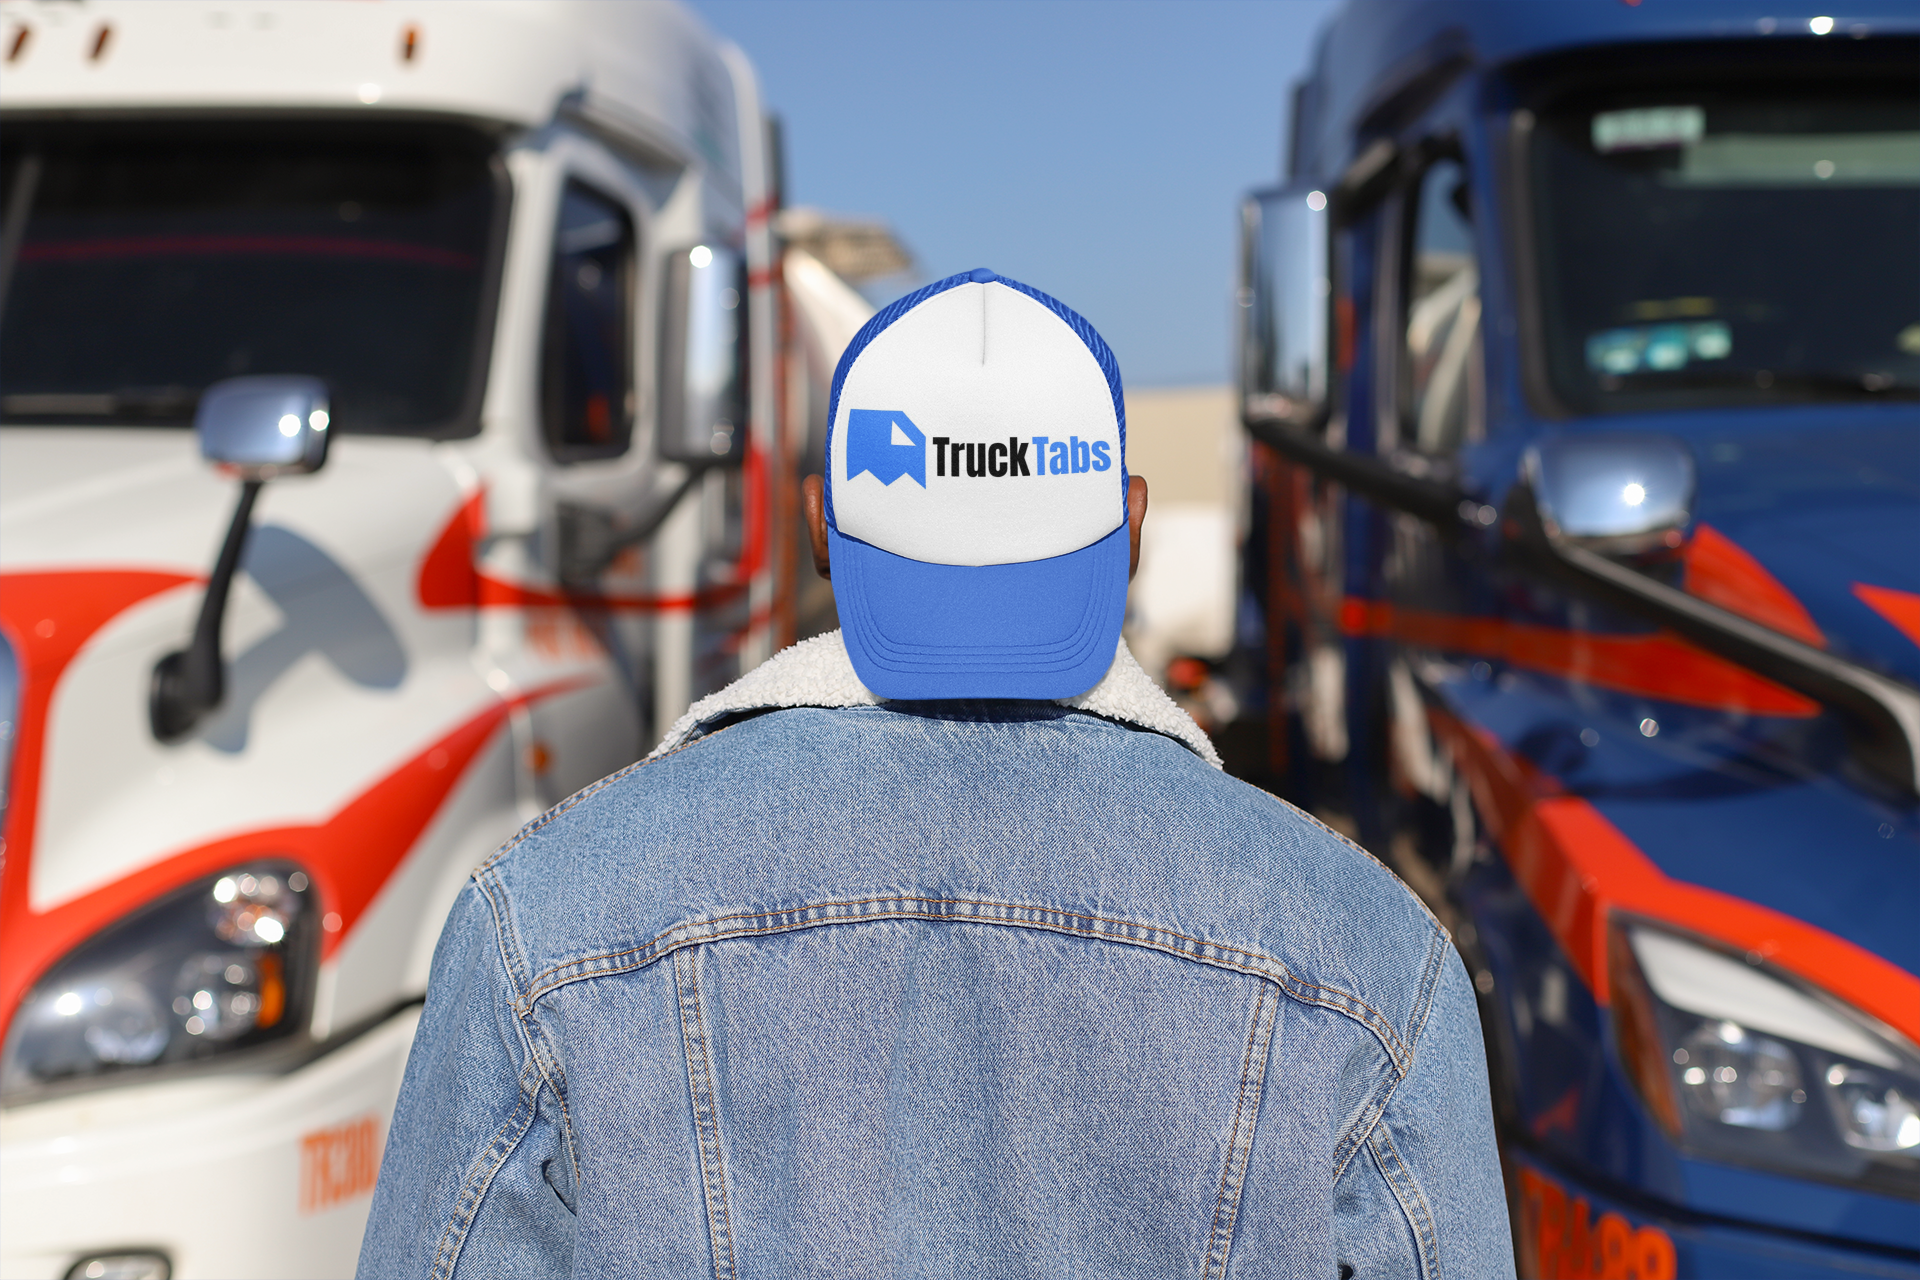 Driver with TruckTabs cap